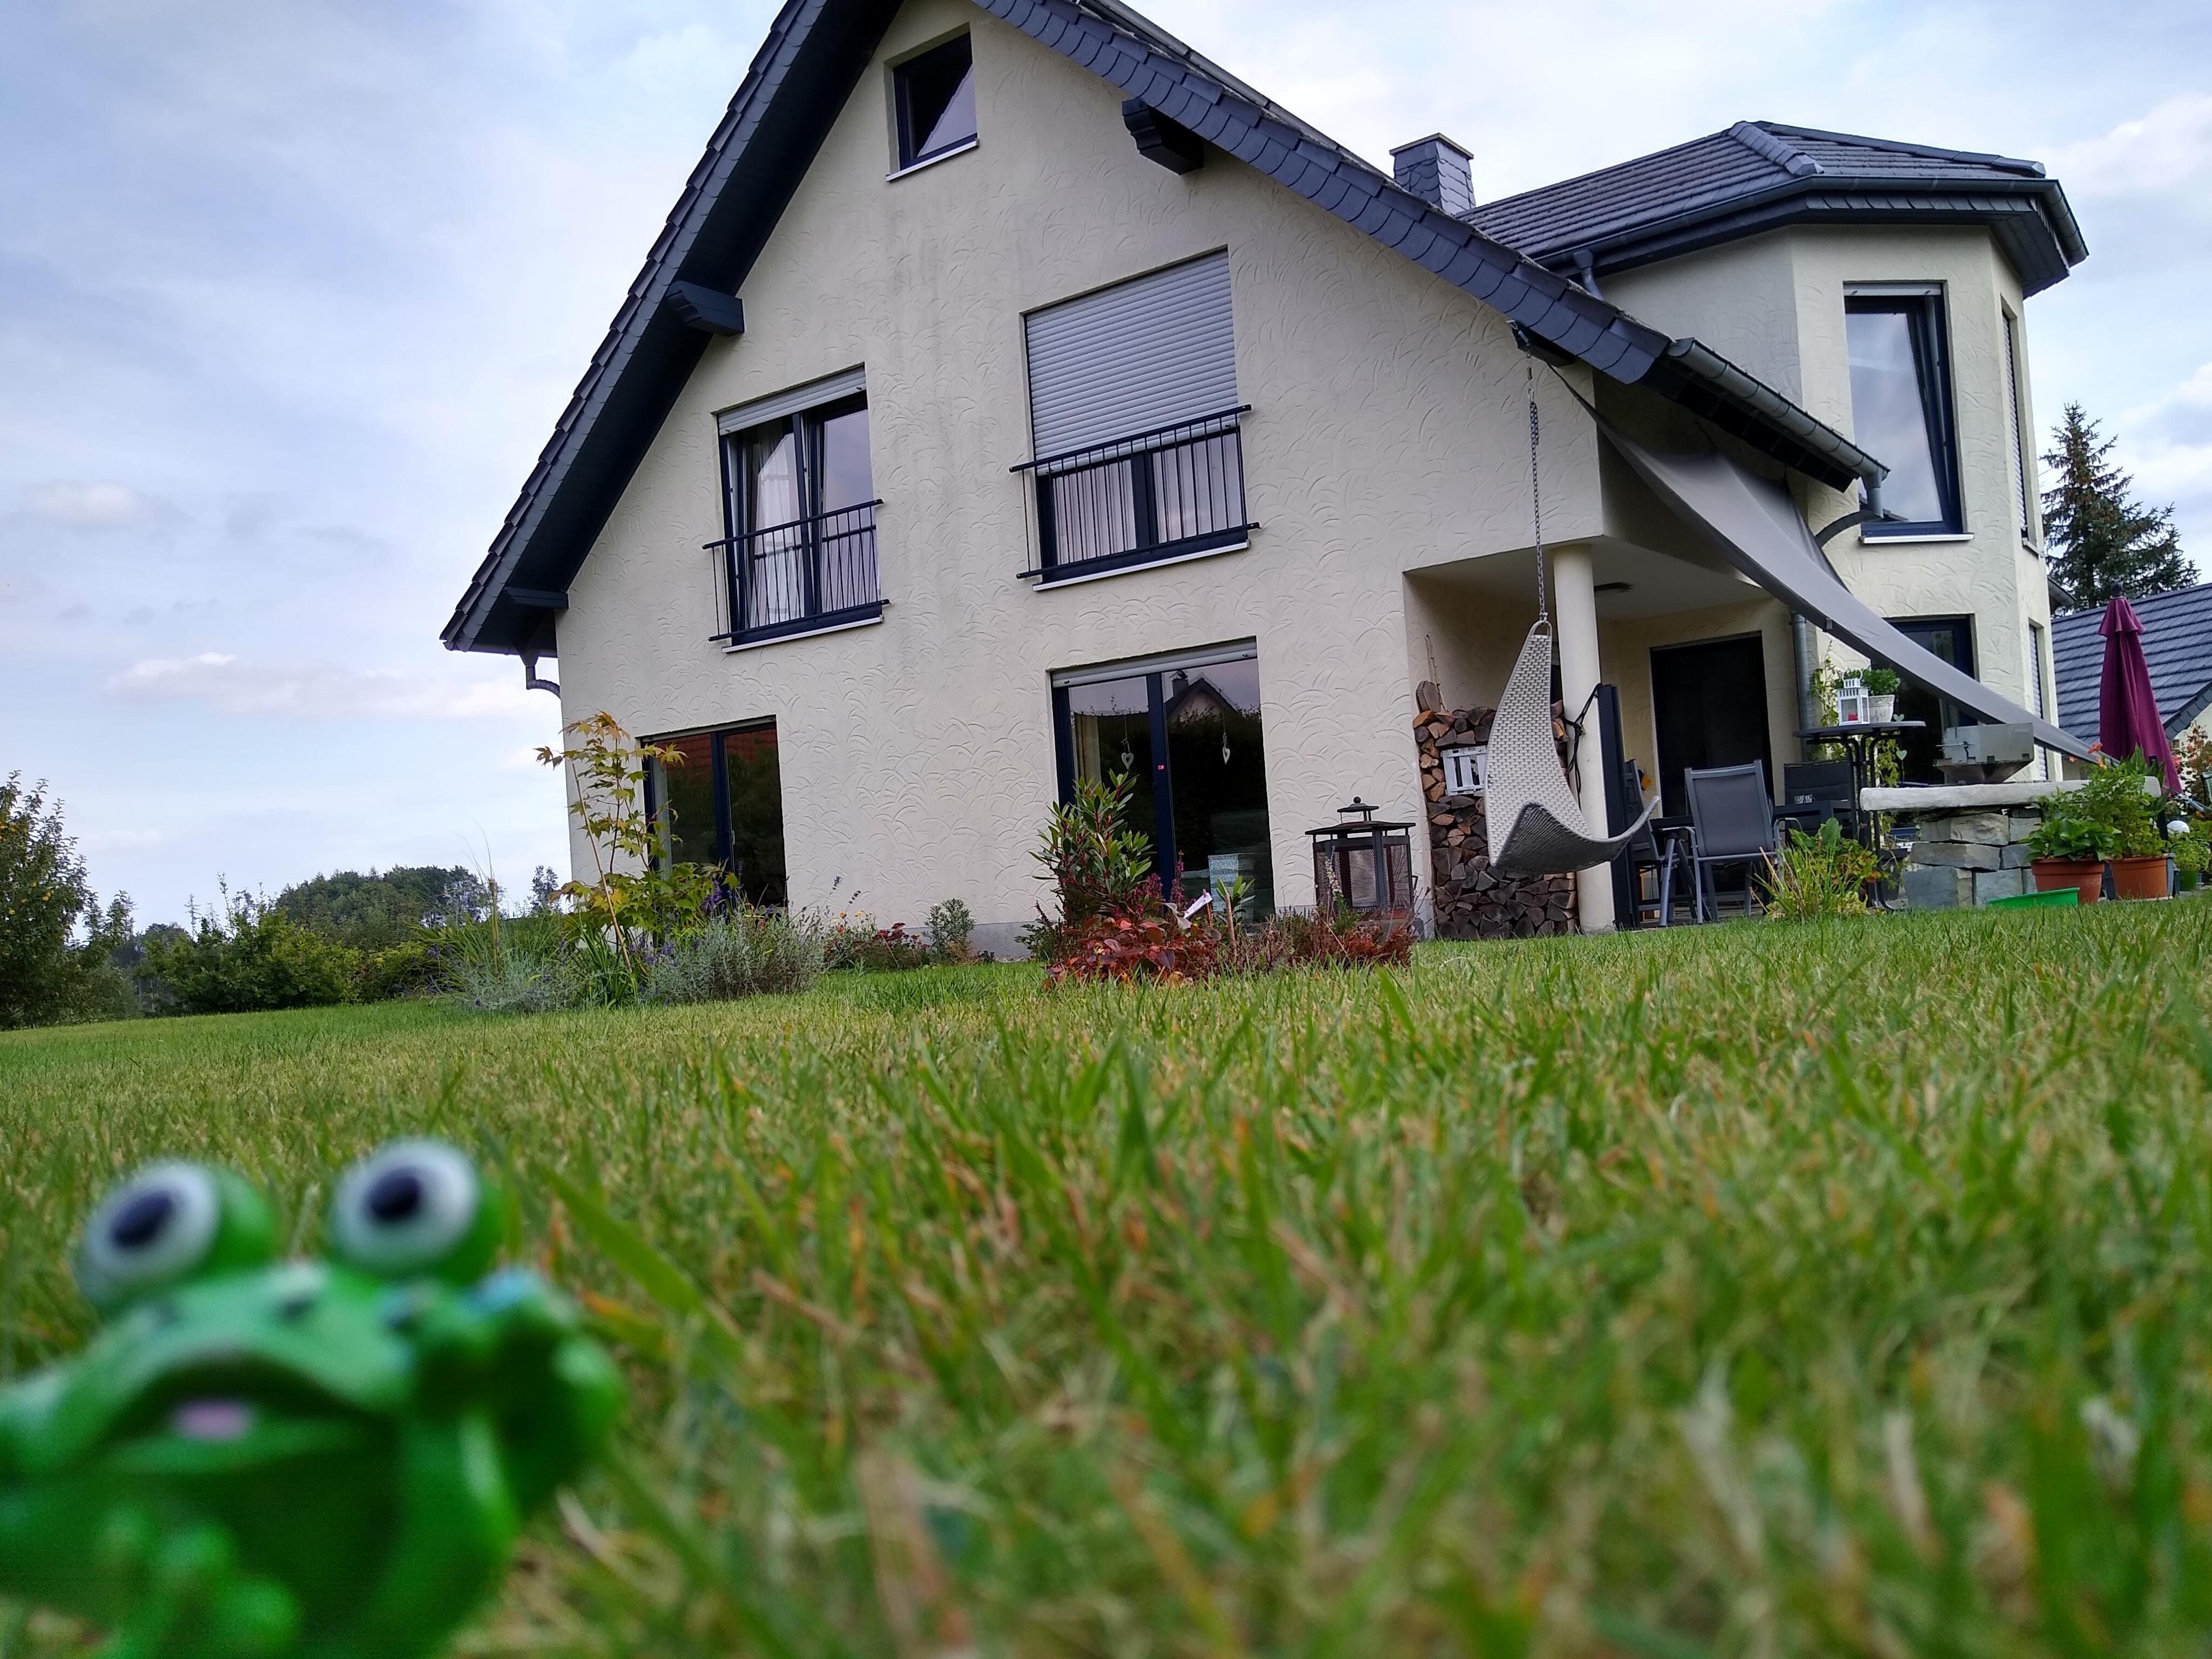 Kermit's home in Bad Wunnenberg